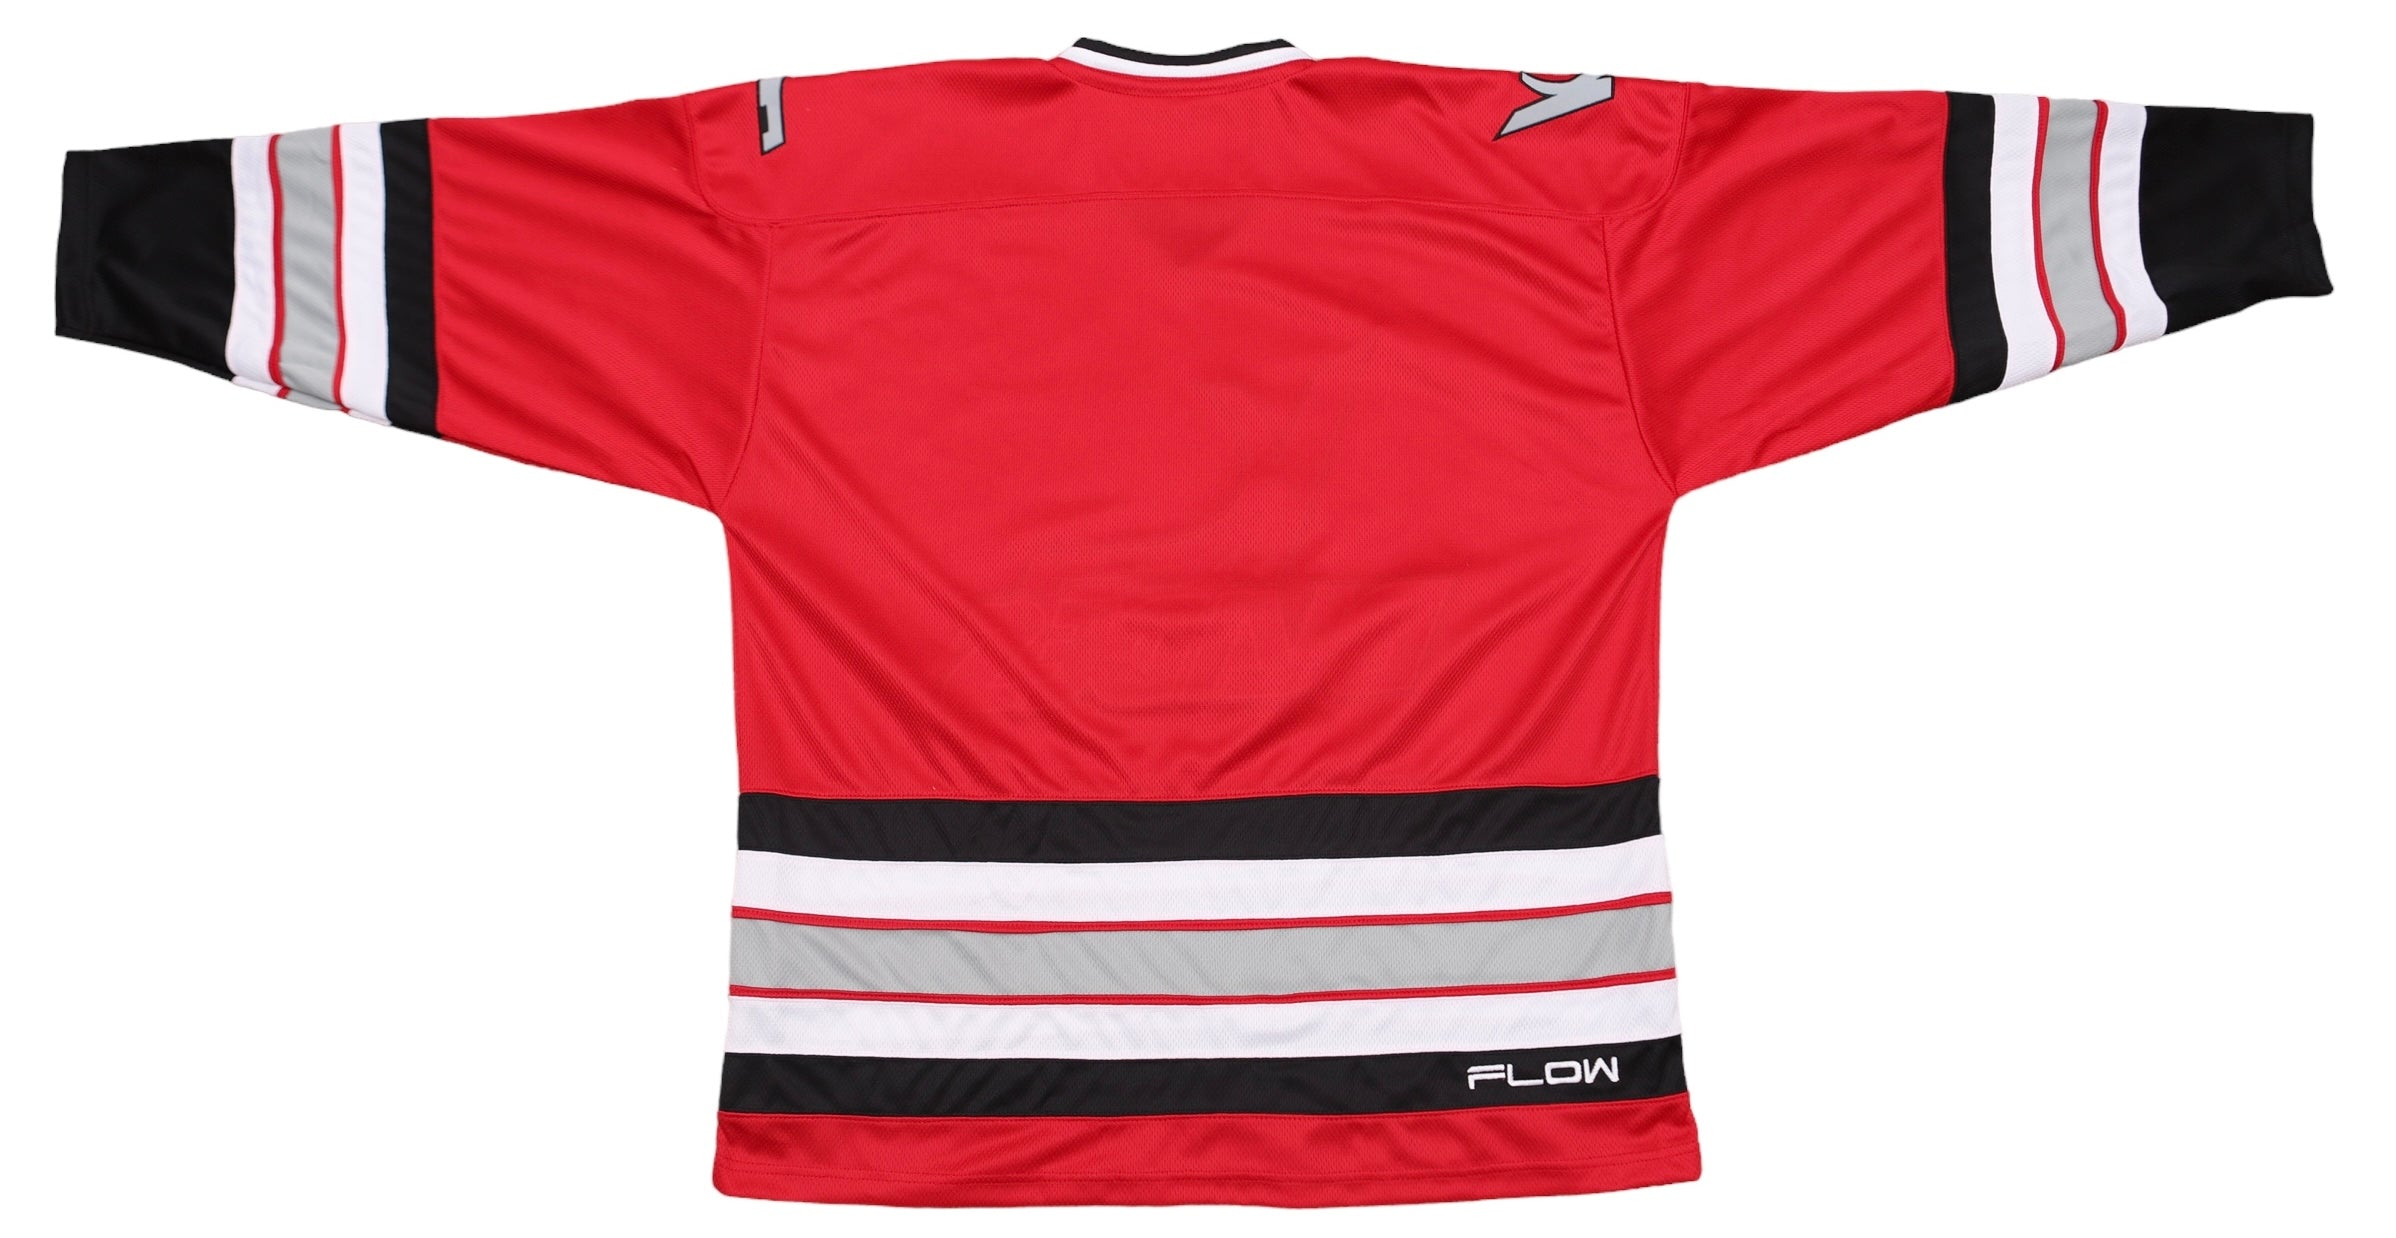  NHL Men's Chicago Blackhawks Retro Sport Jersey (Red, Medium)  : Sports Fan Jerseys : Sports & Outdoors